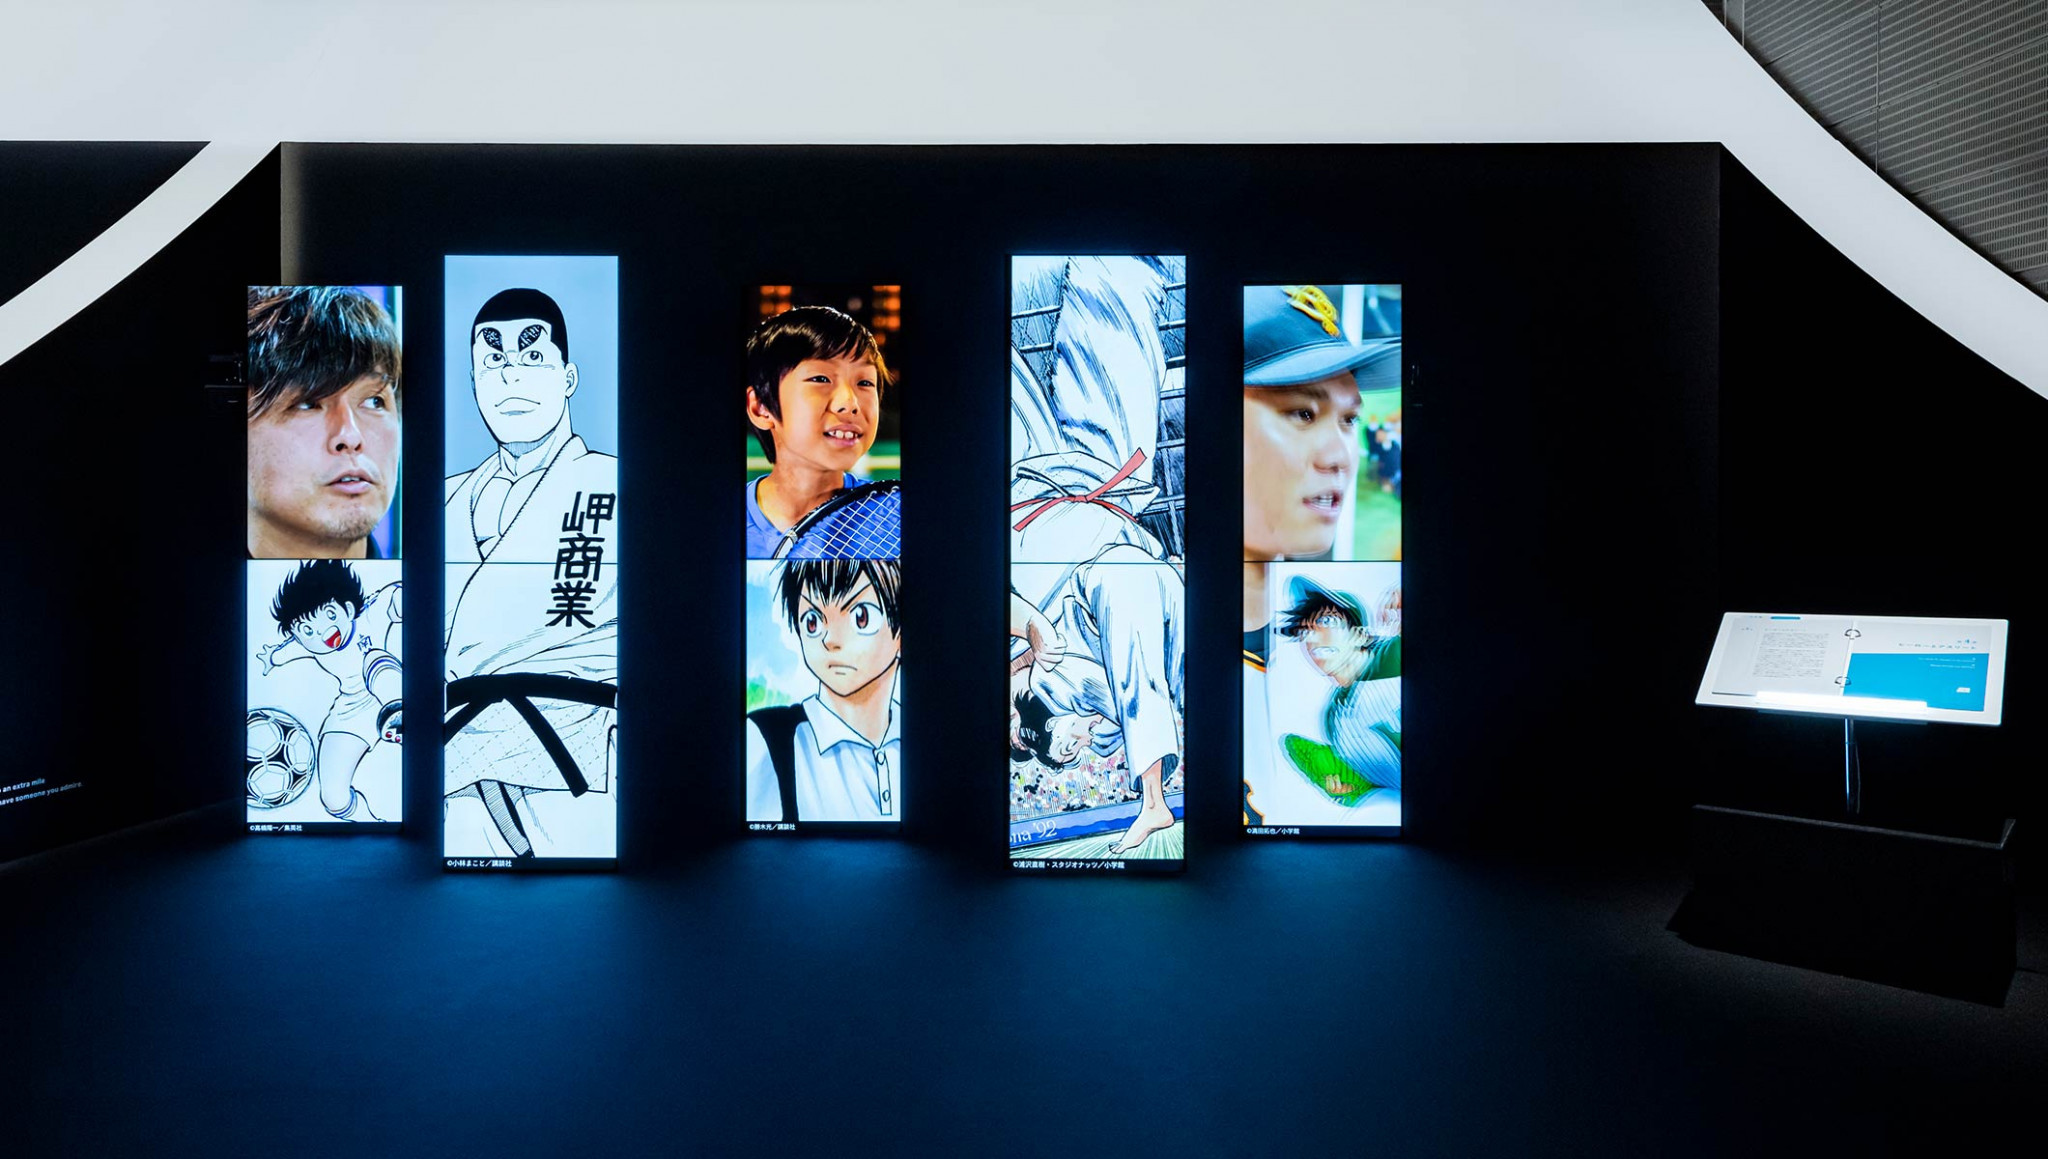 Panasonic hosts "Sports x Manga" exhibition in celebration of Tokyo 2020